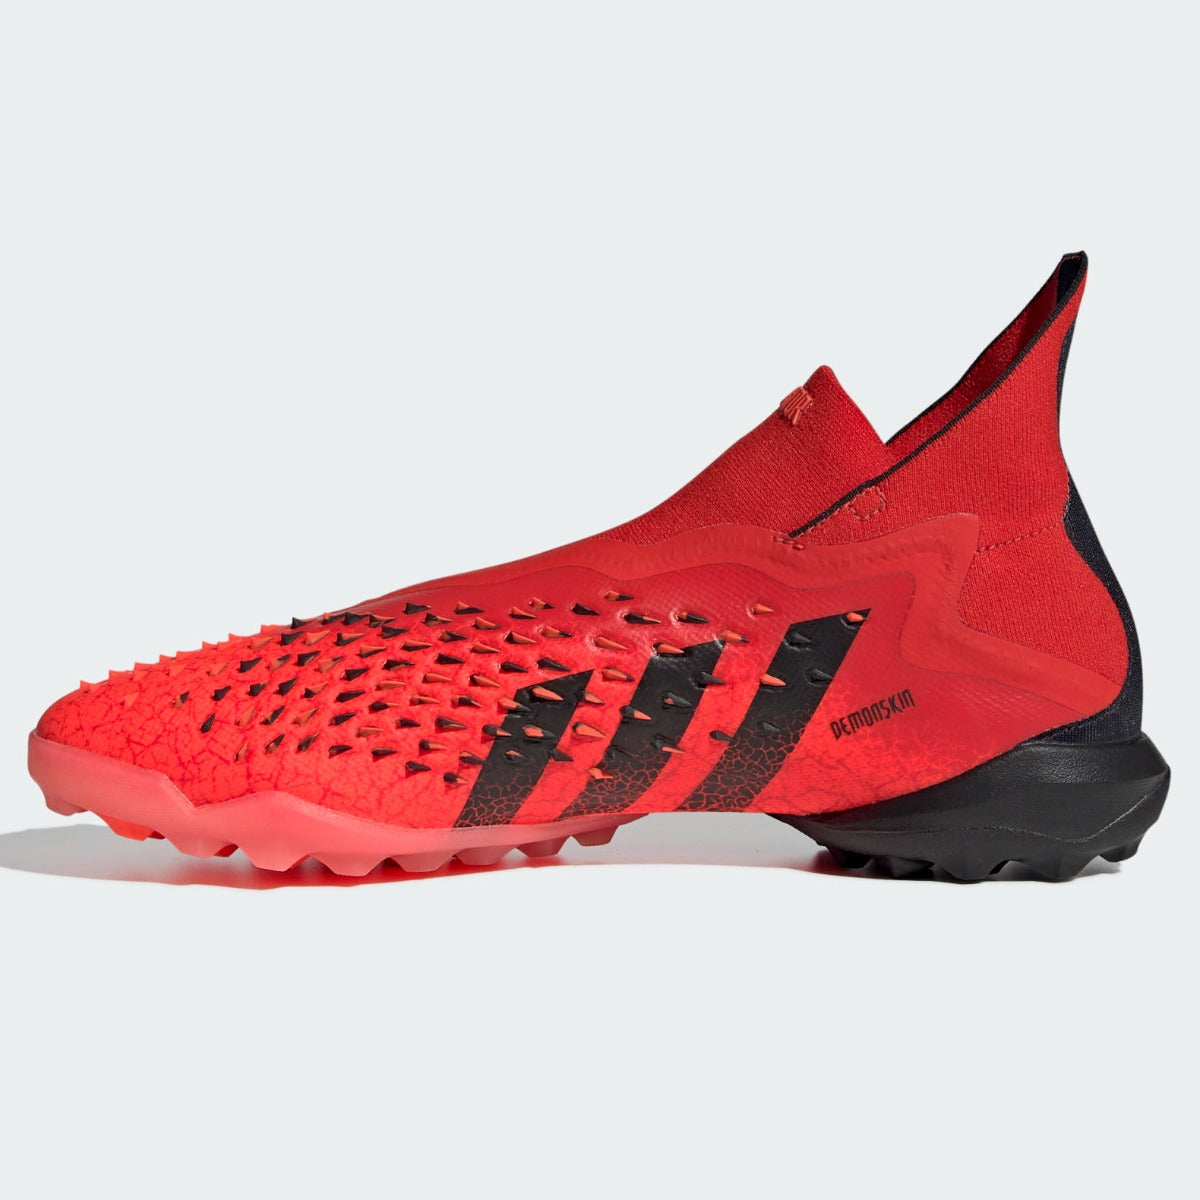 Adidas Predator Freak + TF - Red-Black (Side 2)